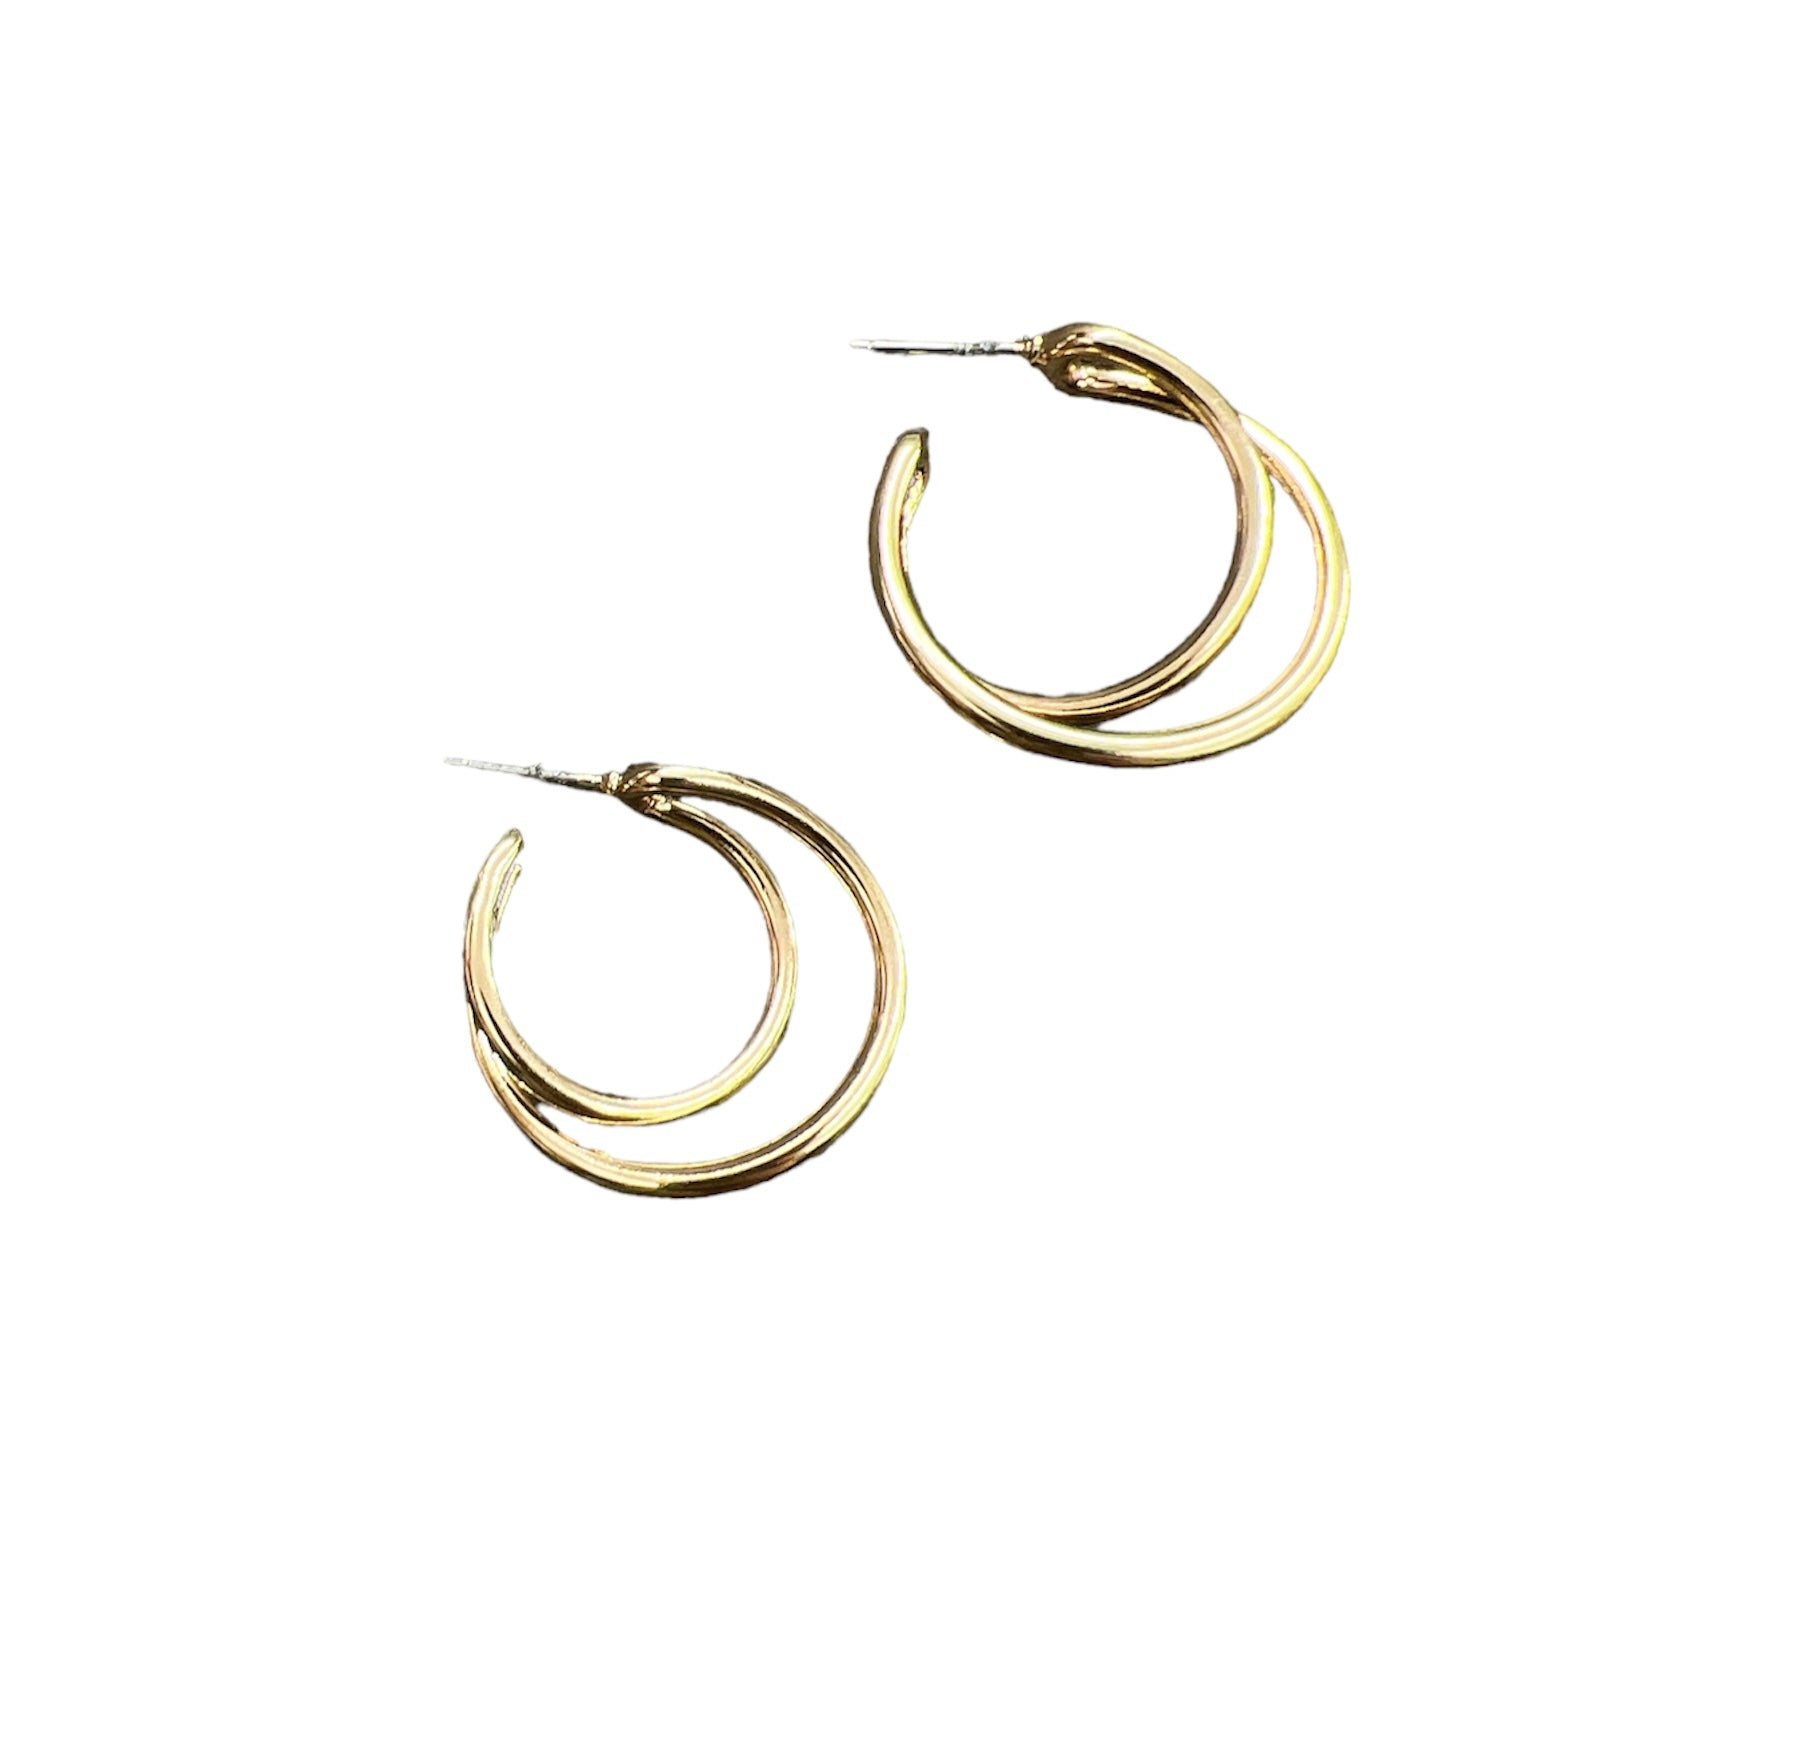 Small Gold Double Hoop Earrings